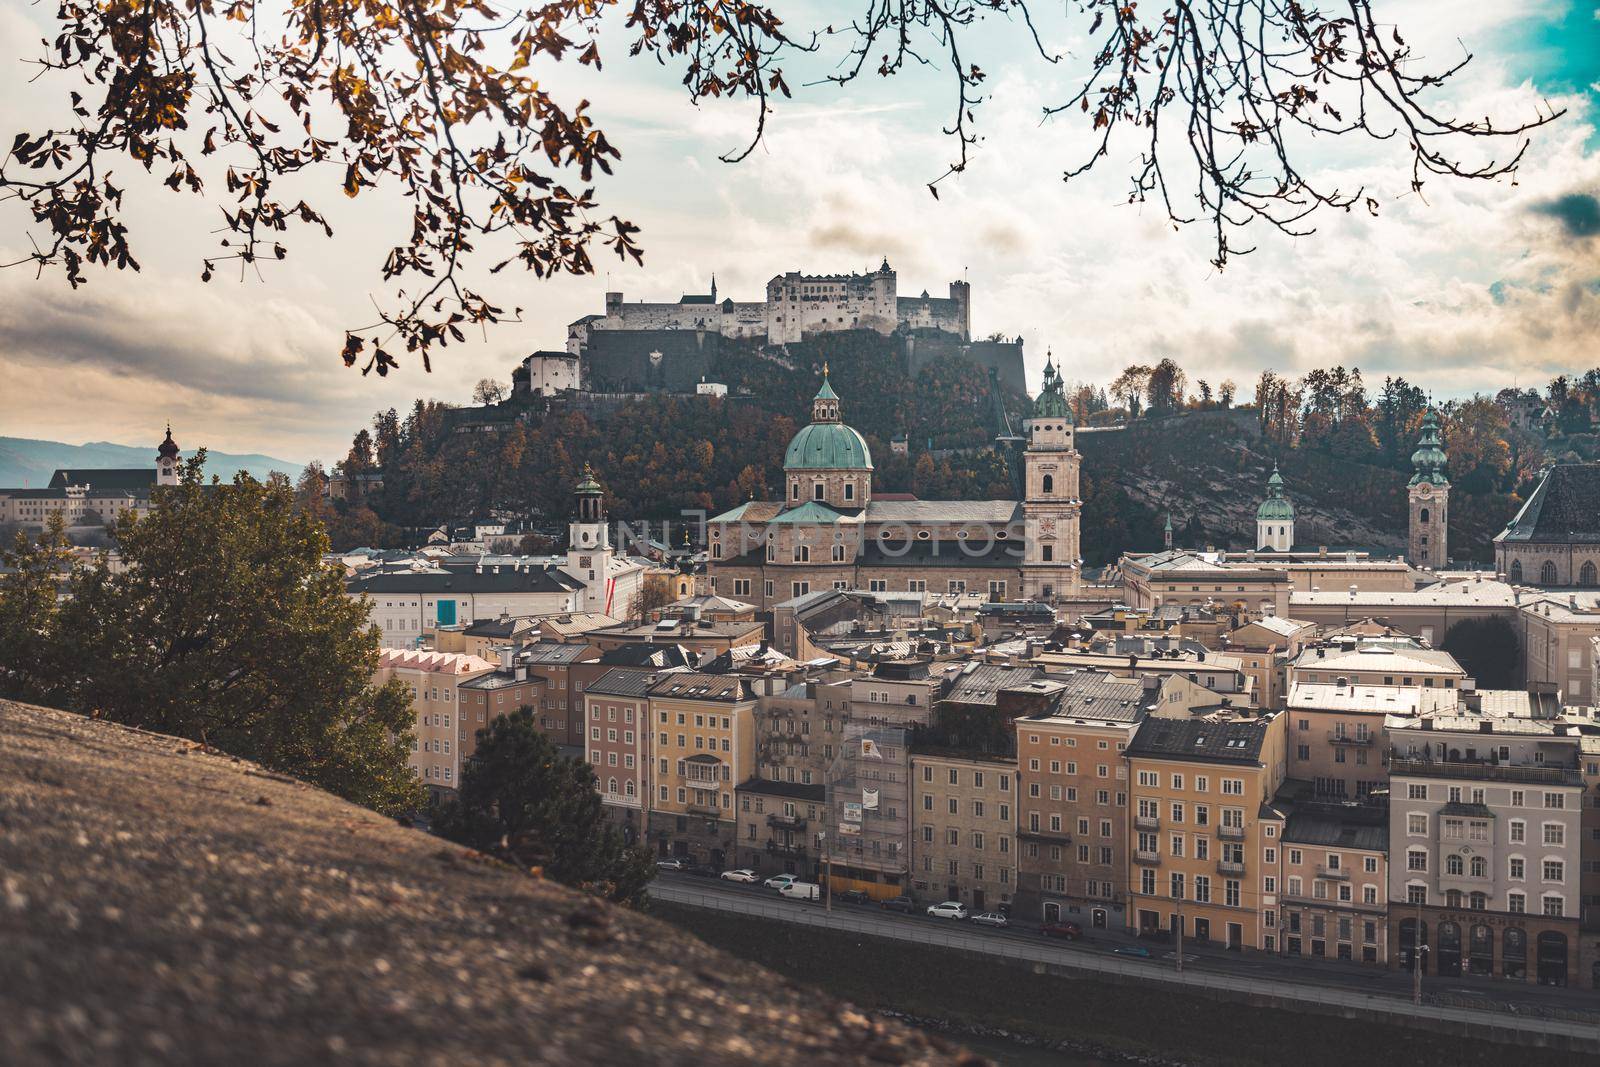 European city trip: Salzburg old city in autumn, colorful sunshine, Austria by Daxenbichler